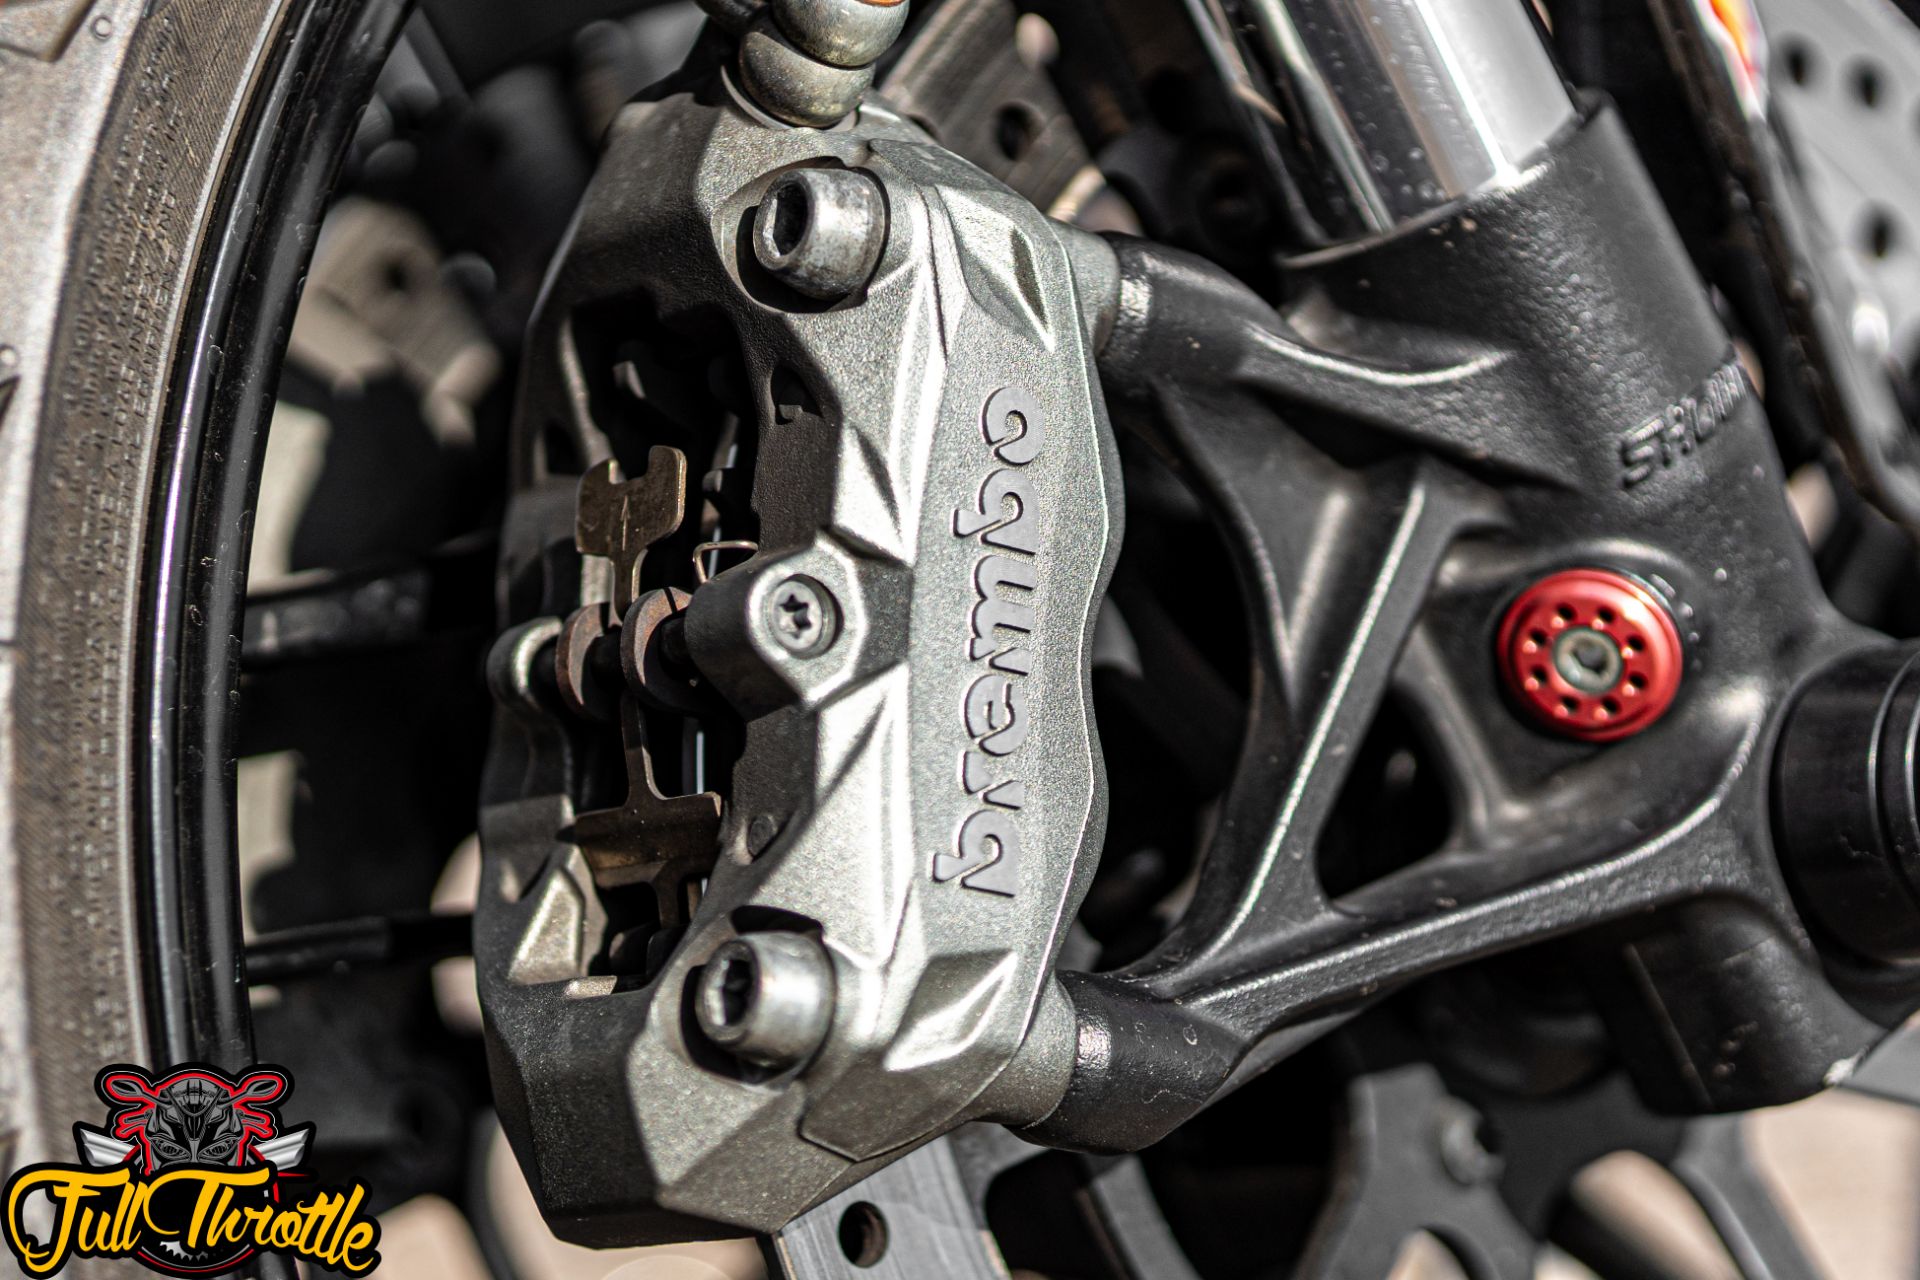 2014 Ducati Superbike 899 Panigale in Houston, Texas - Photo 19